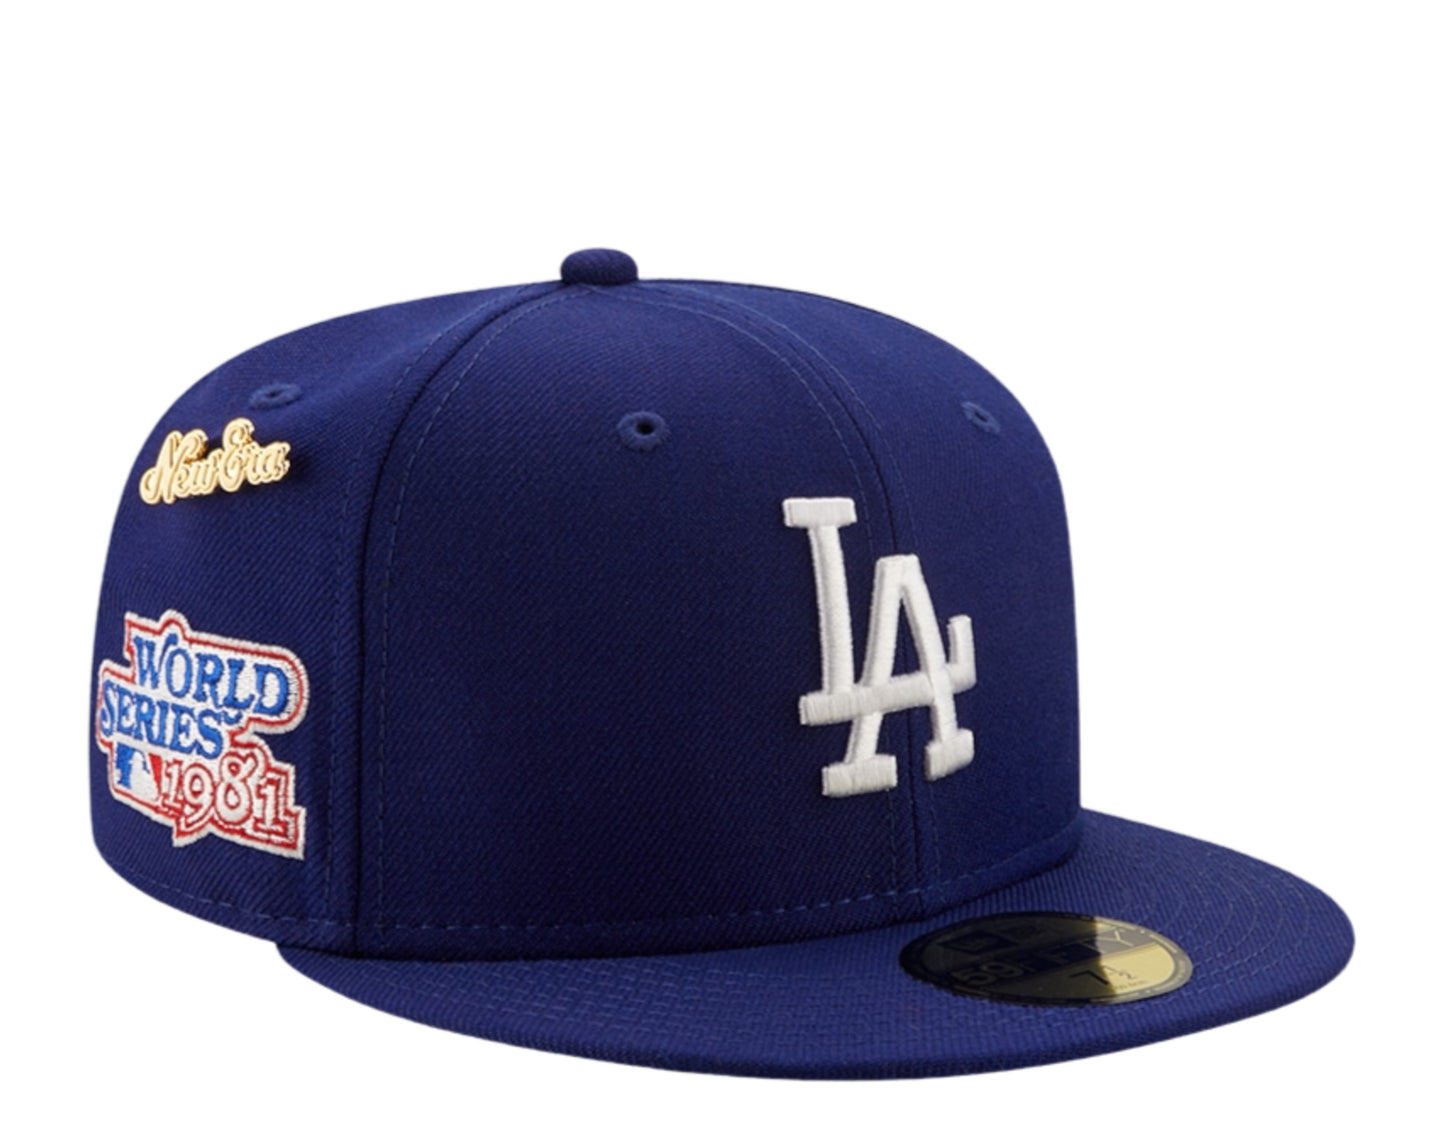 New Era L.A Dodgers Blue Fitted Hat MLB World Series Champion History cap  w/Pin